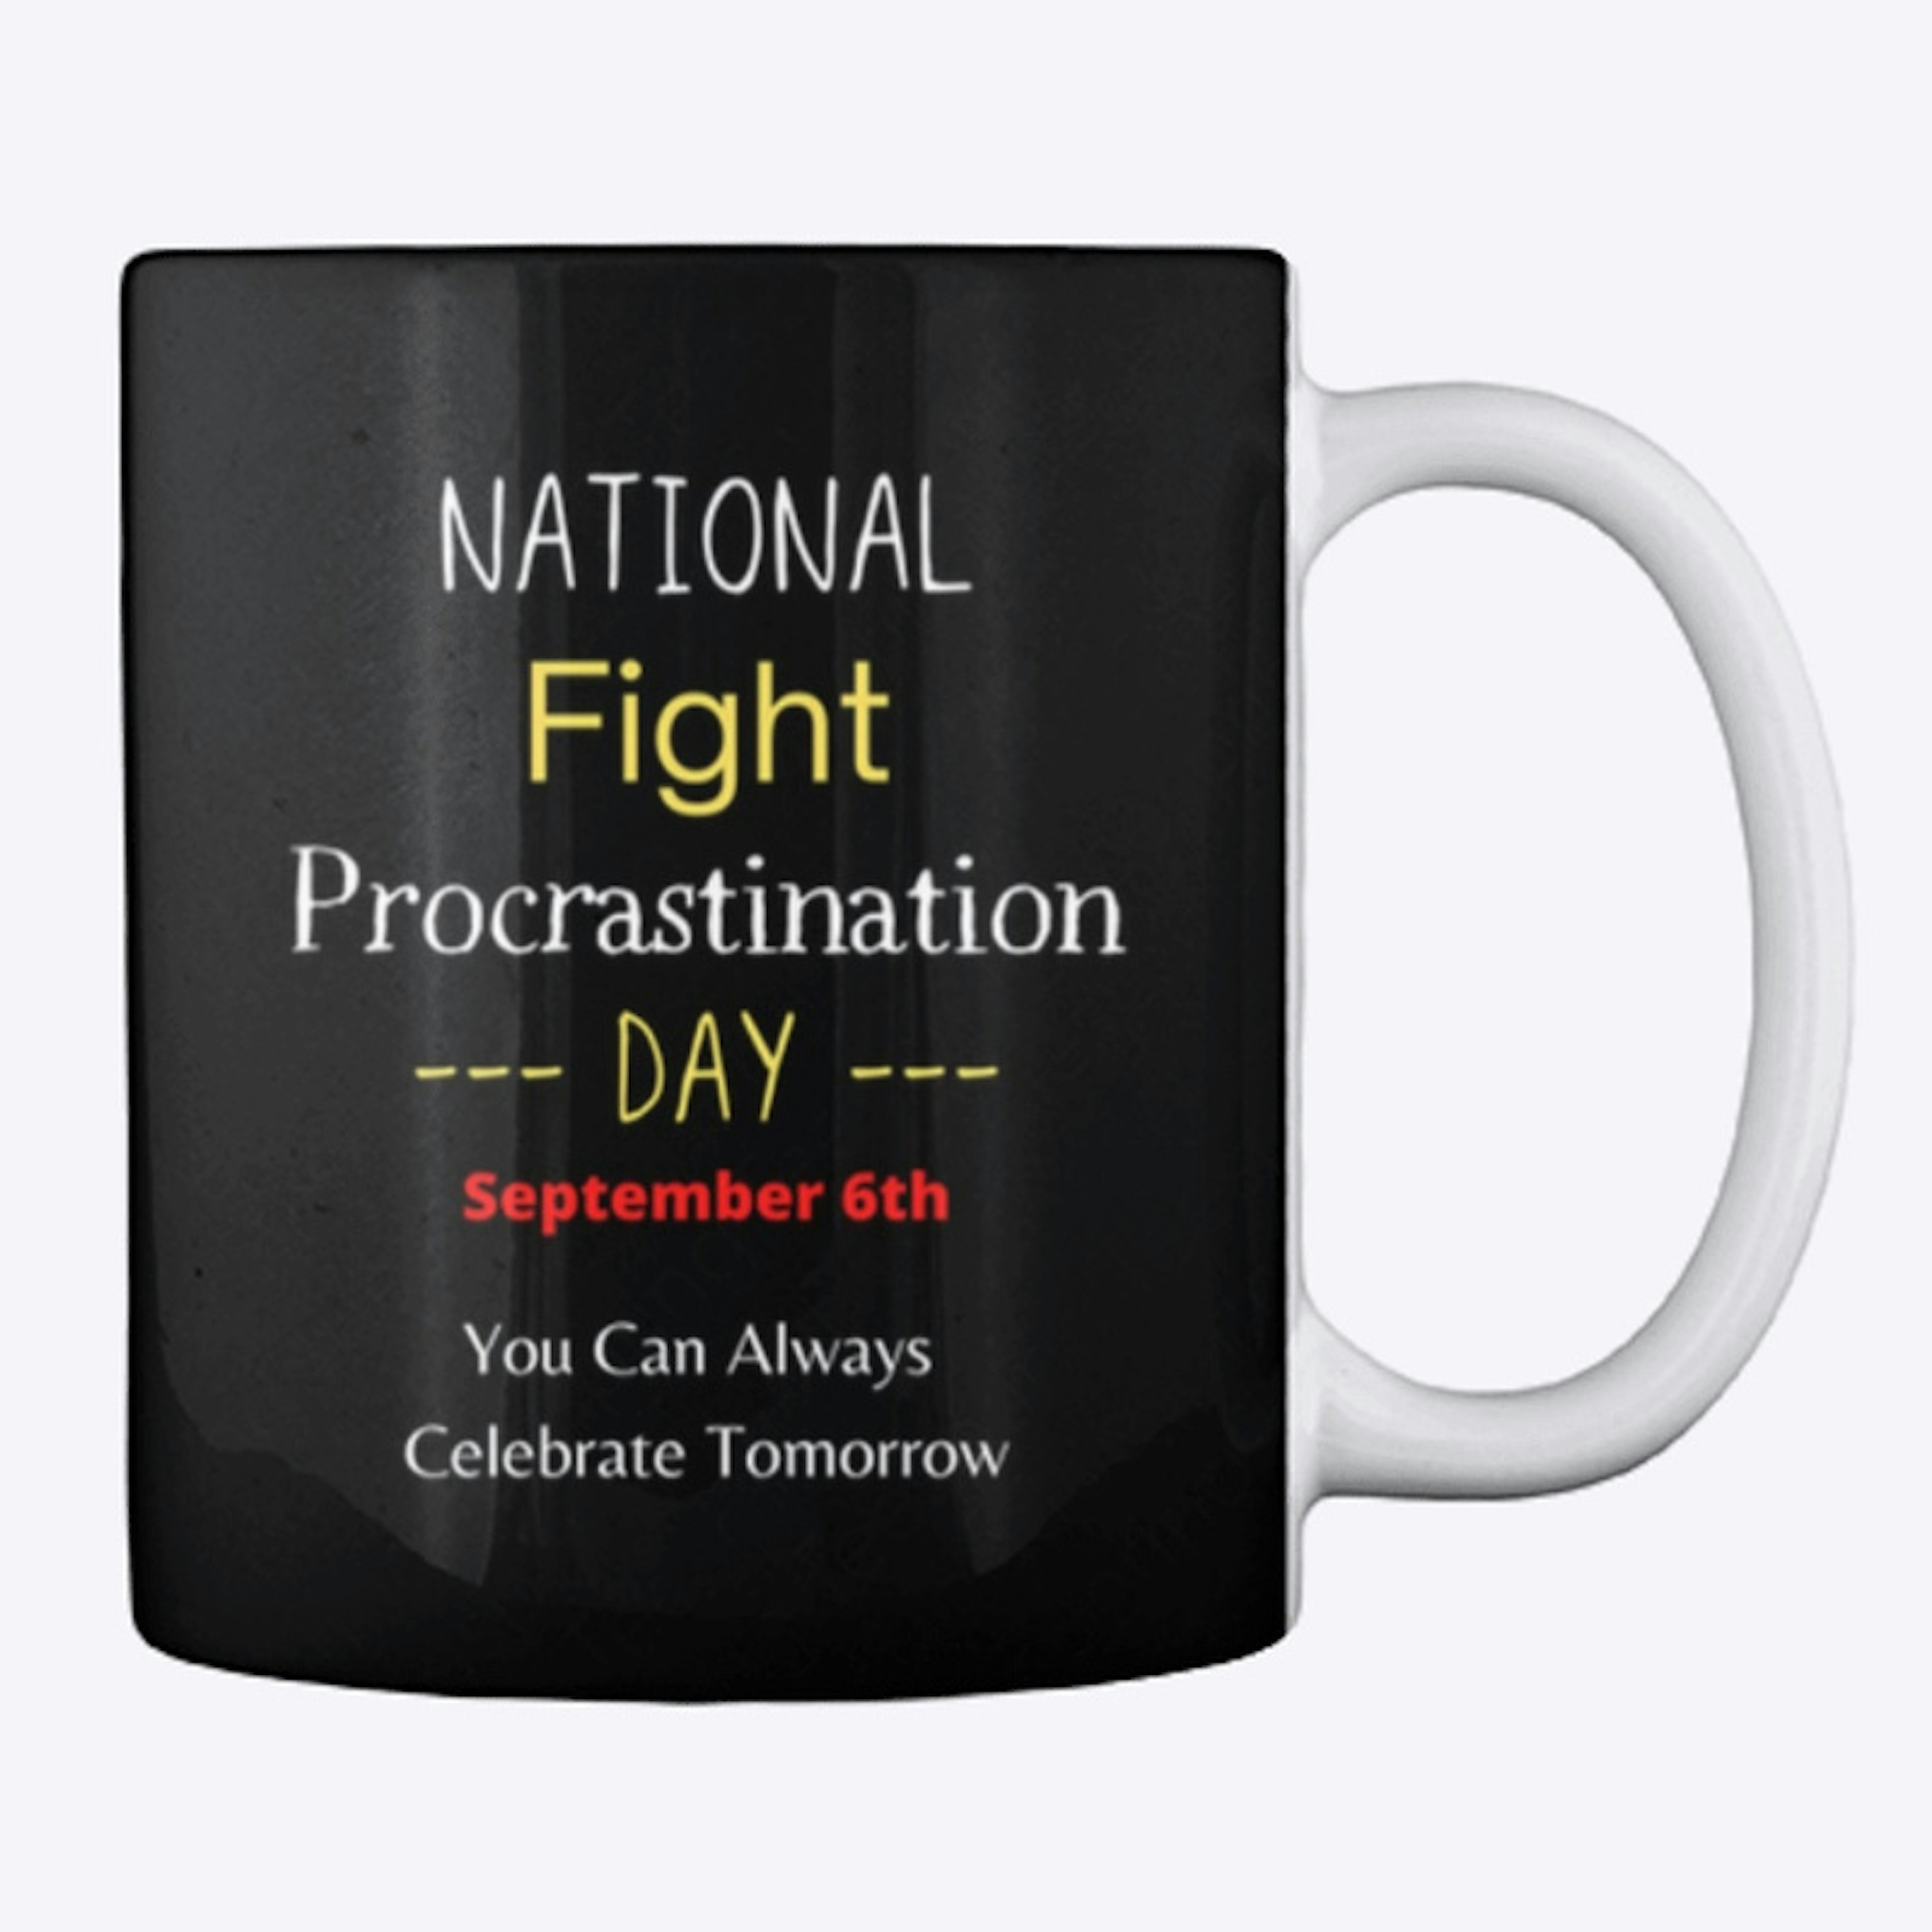 National Fight Procrastination Day